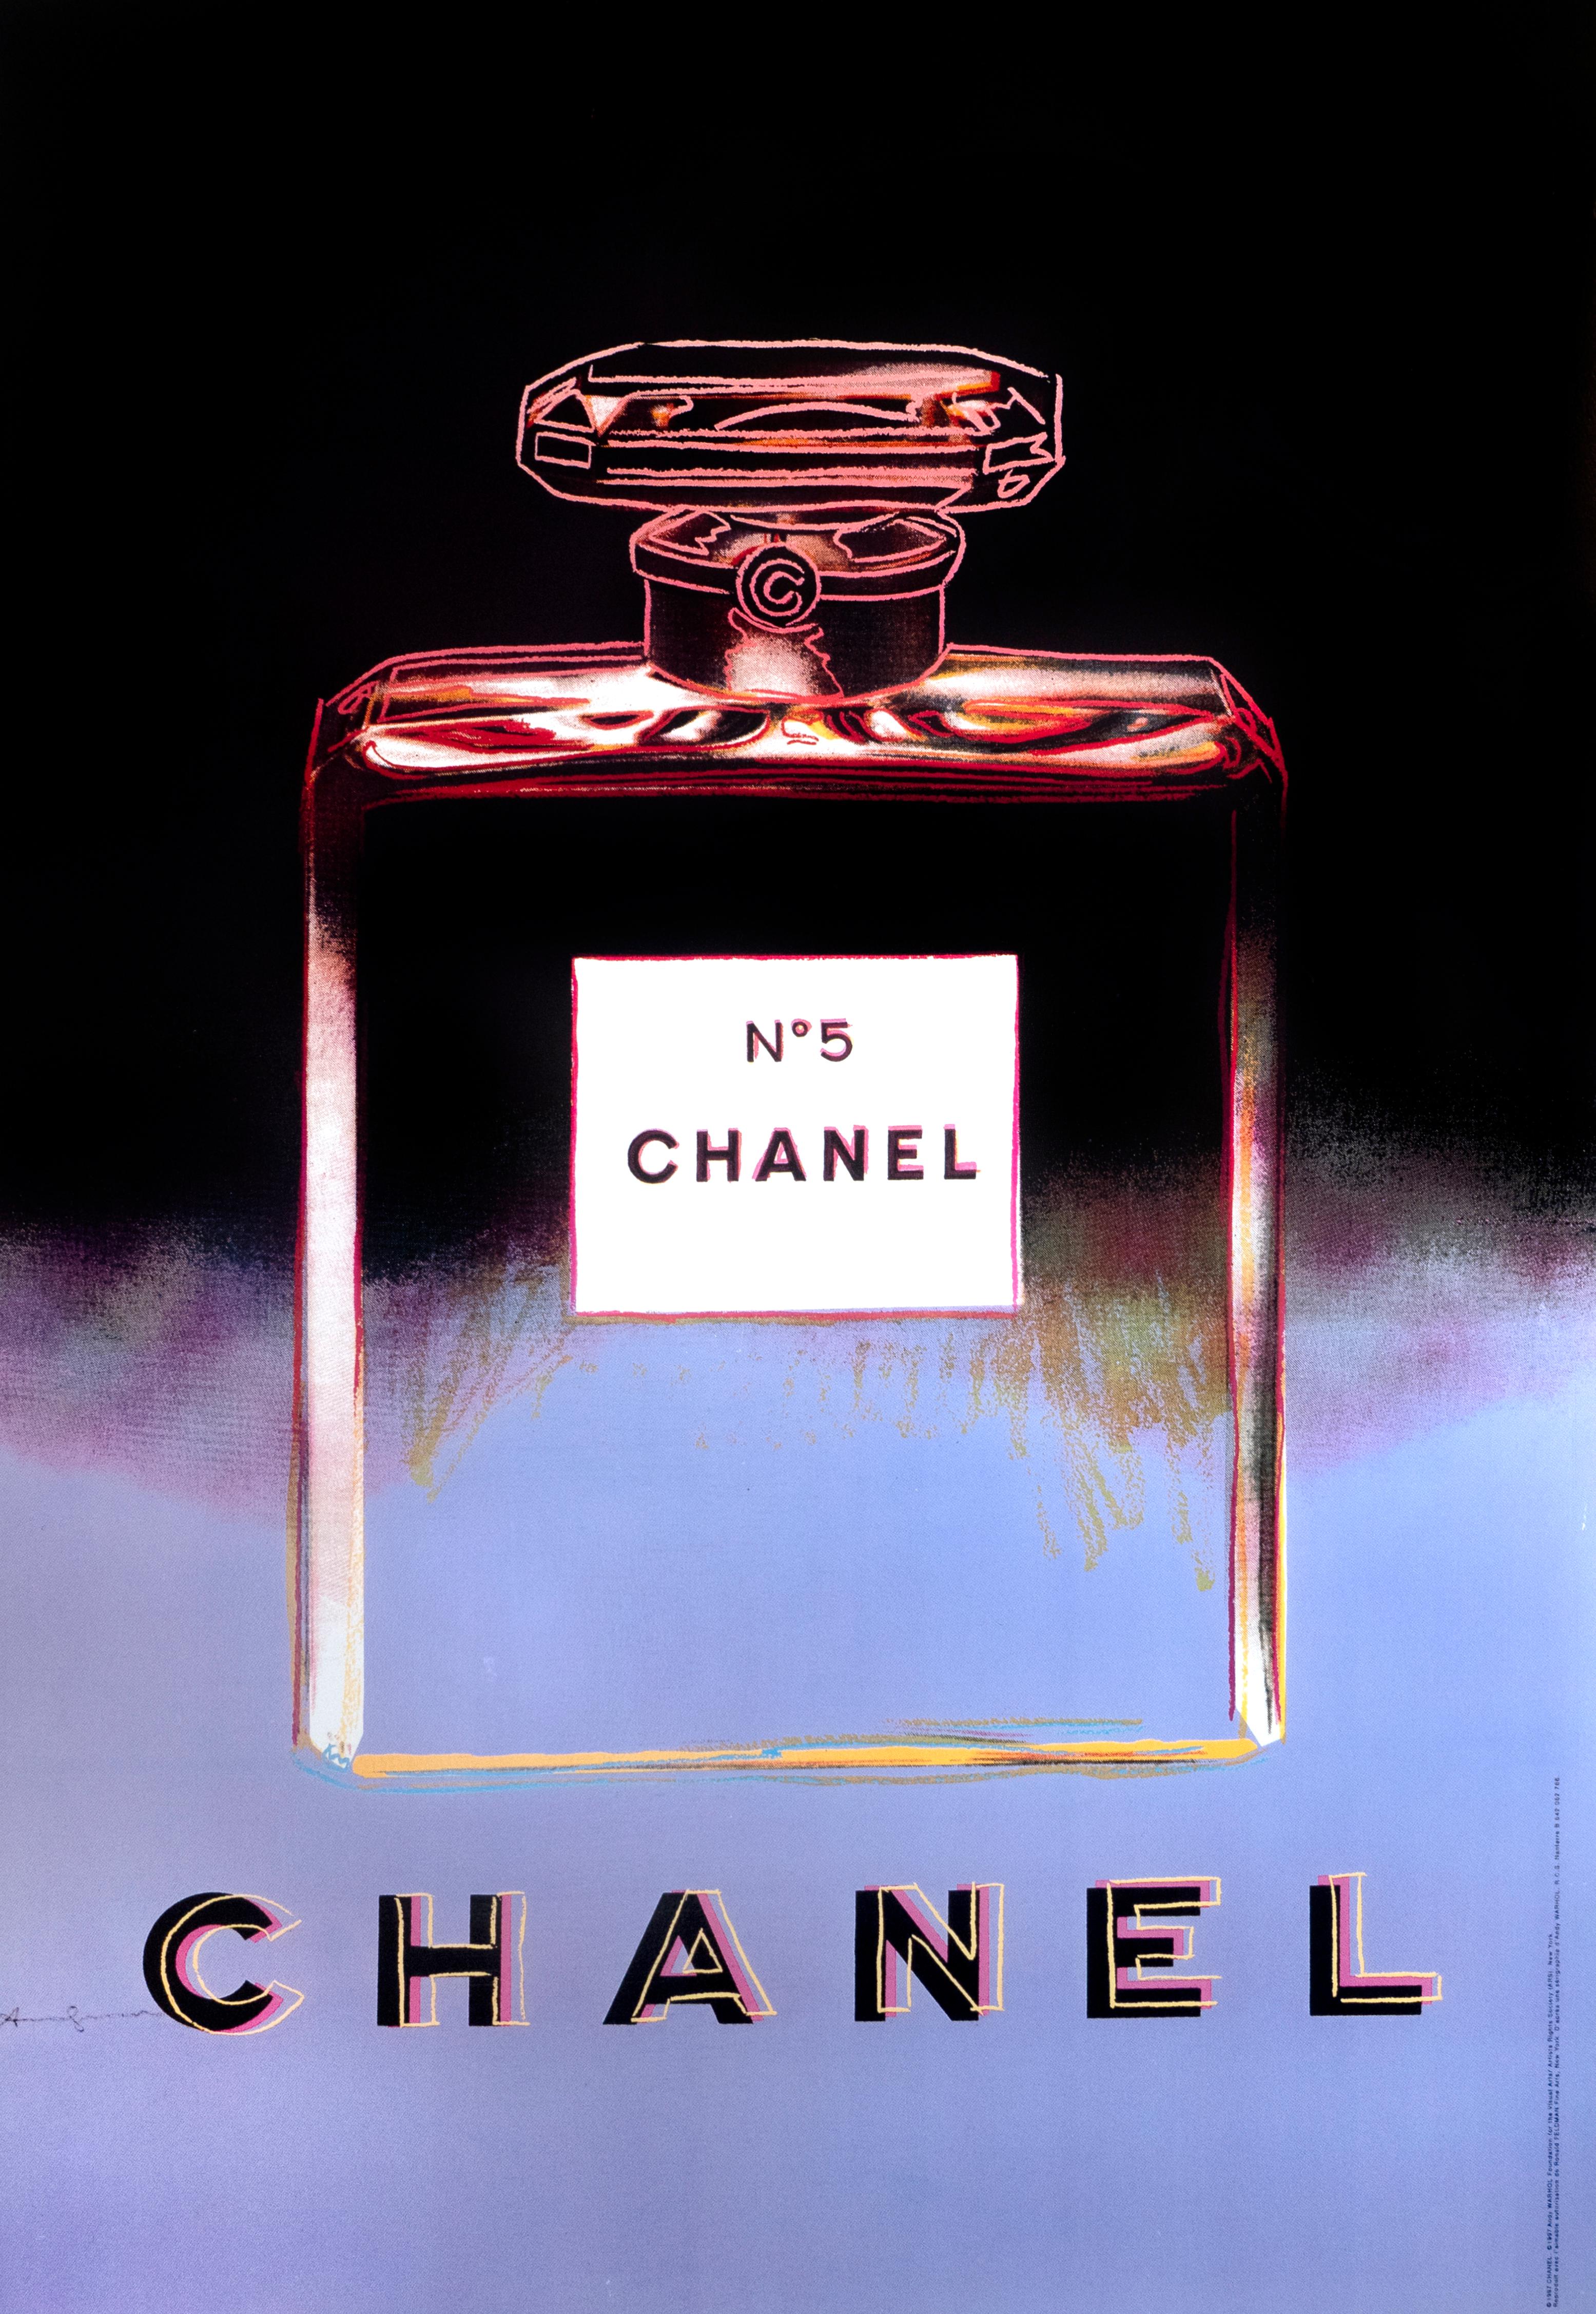 Chanel No. 5 (black/purple) Warhol Pop Art Perfume Original Vintage Poster